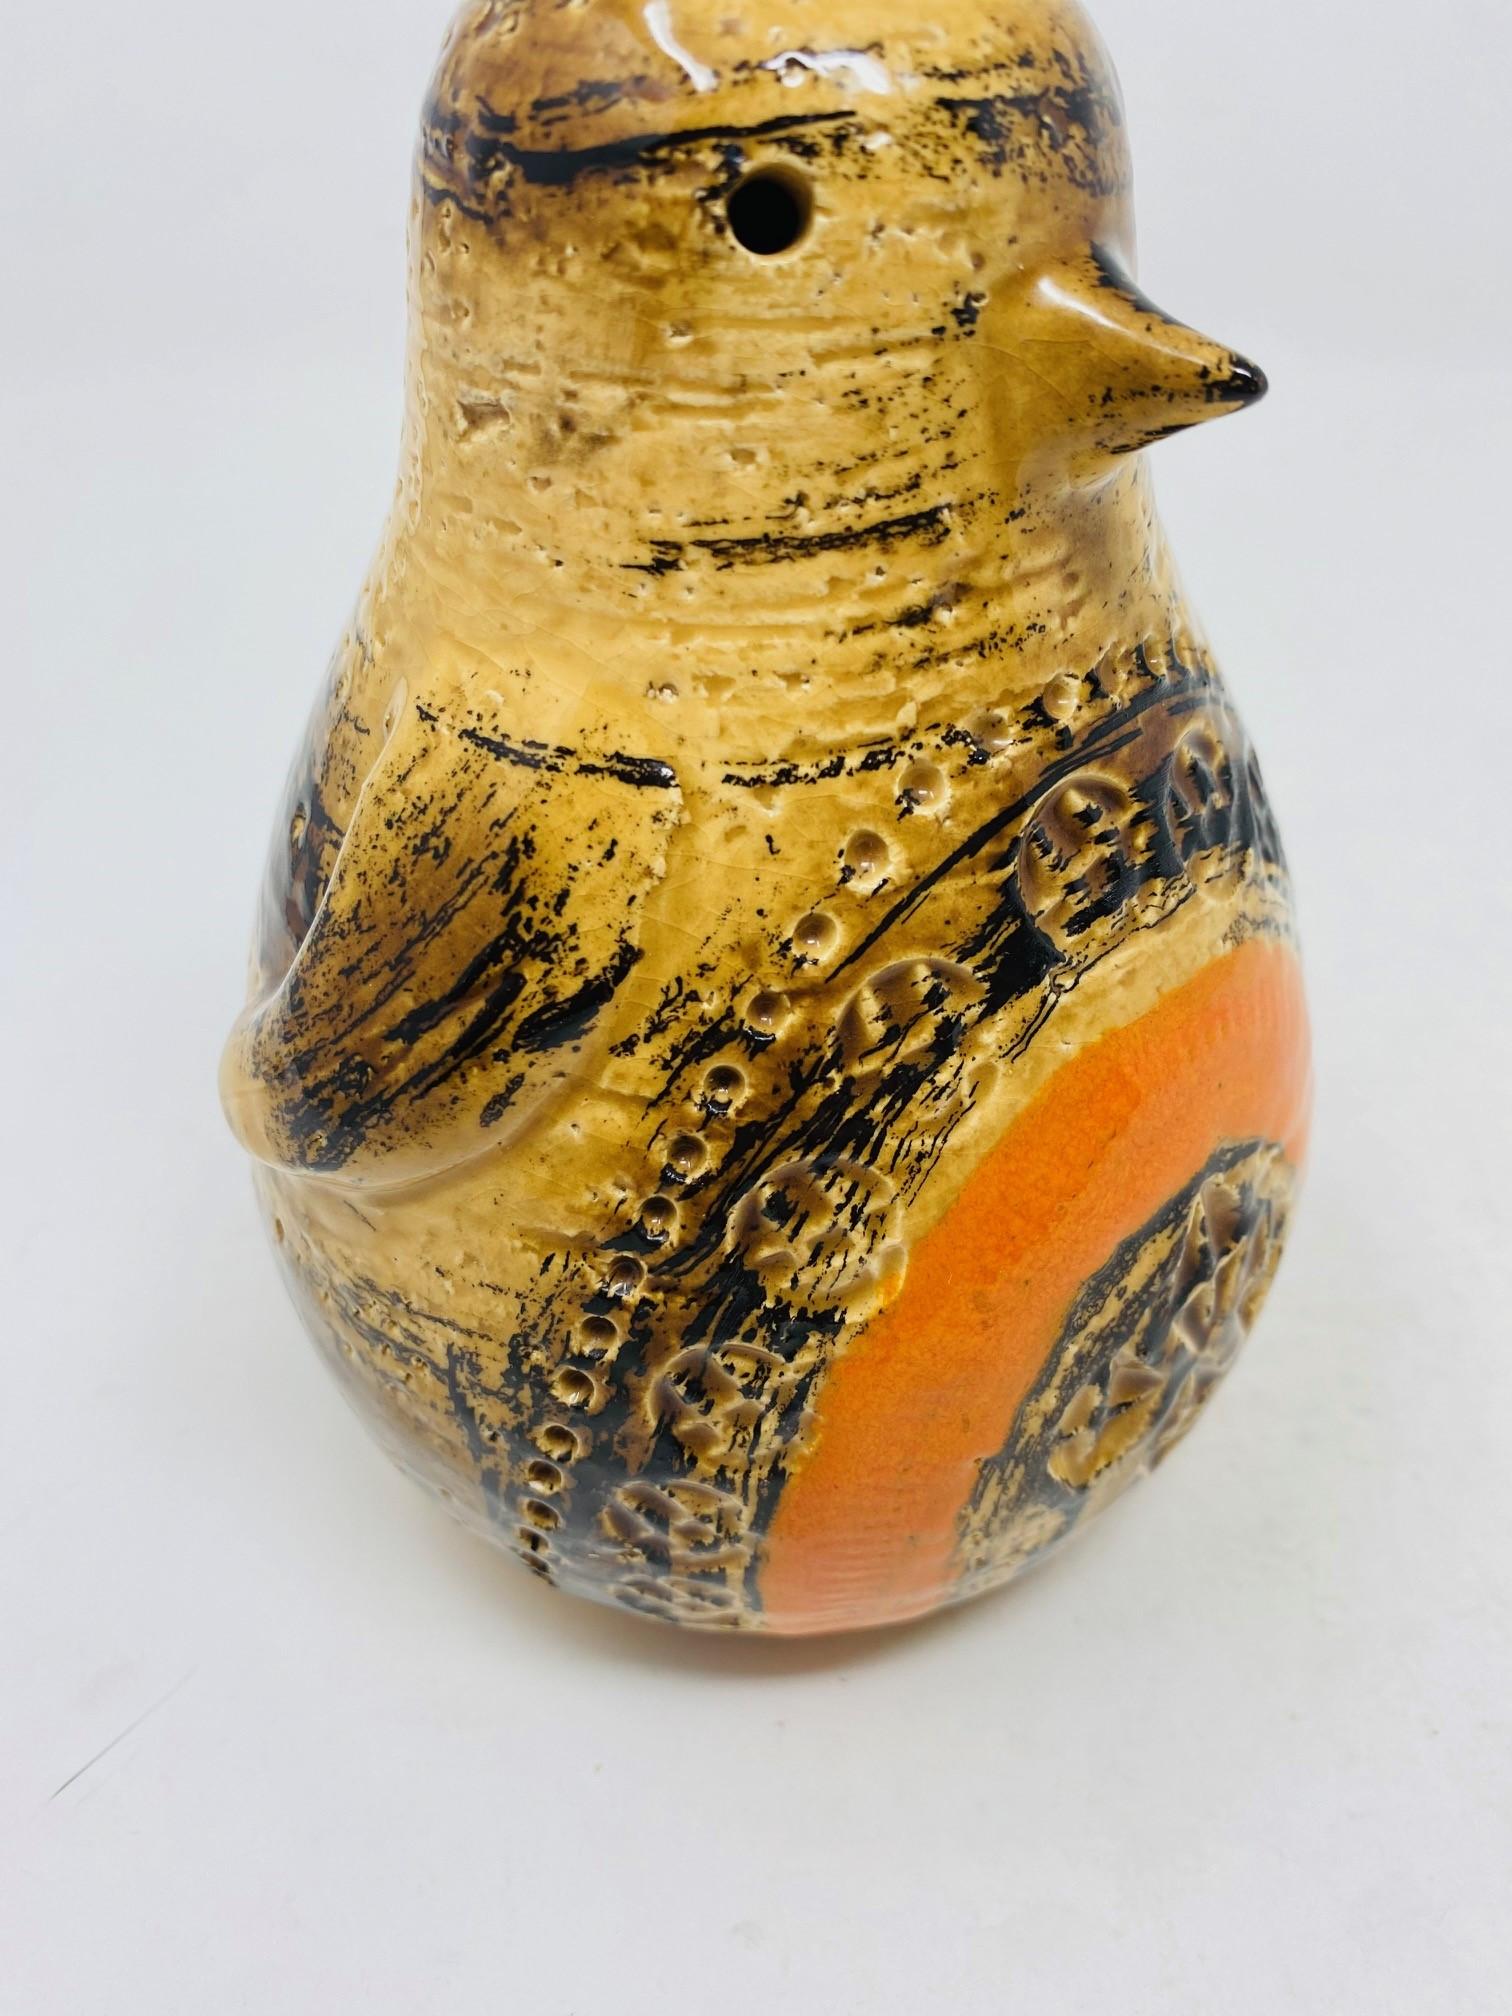 Vintage Aldo Londi Italian Pottery Penguin Sculpture by Bitossi Raymor 1